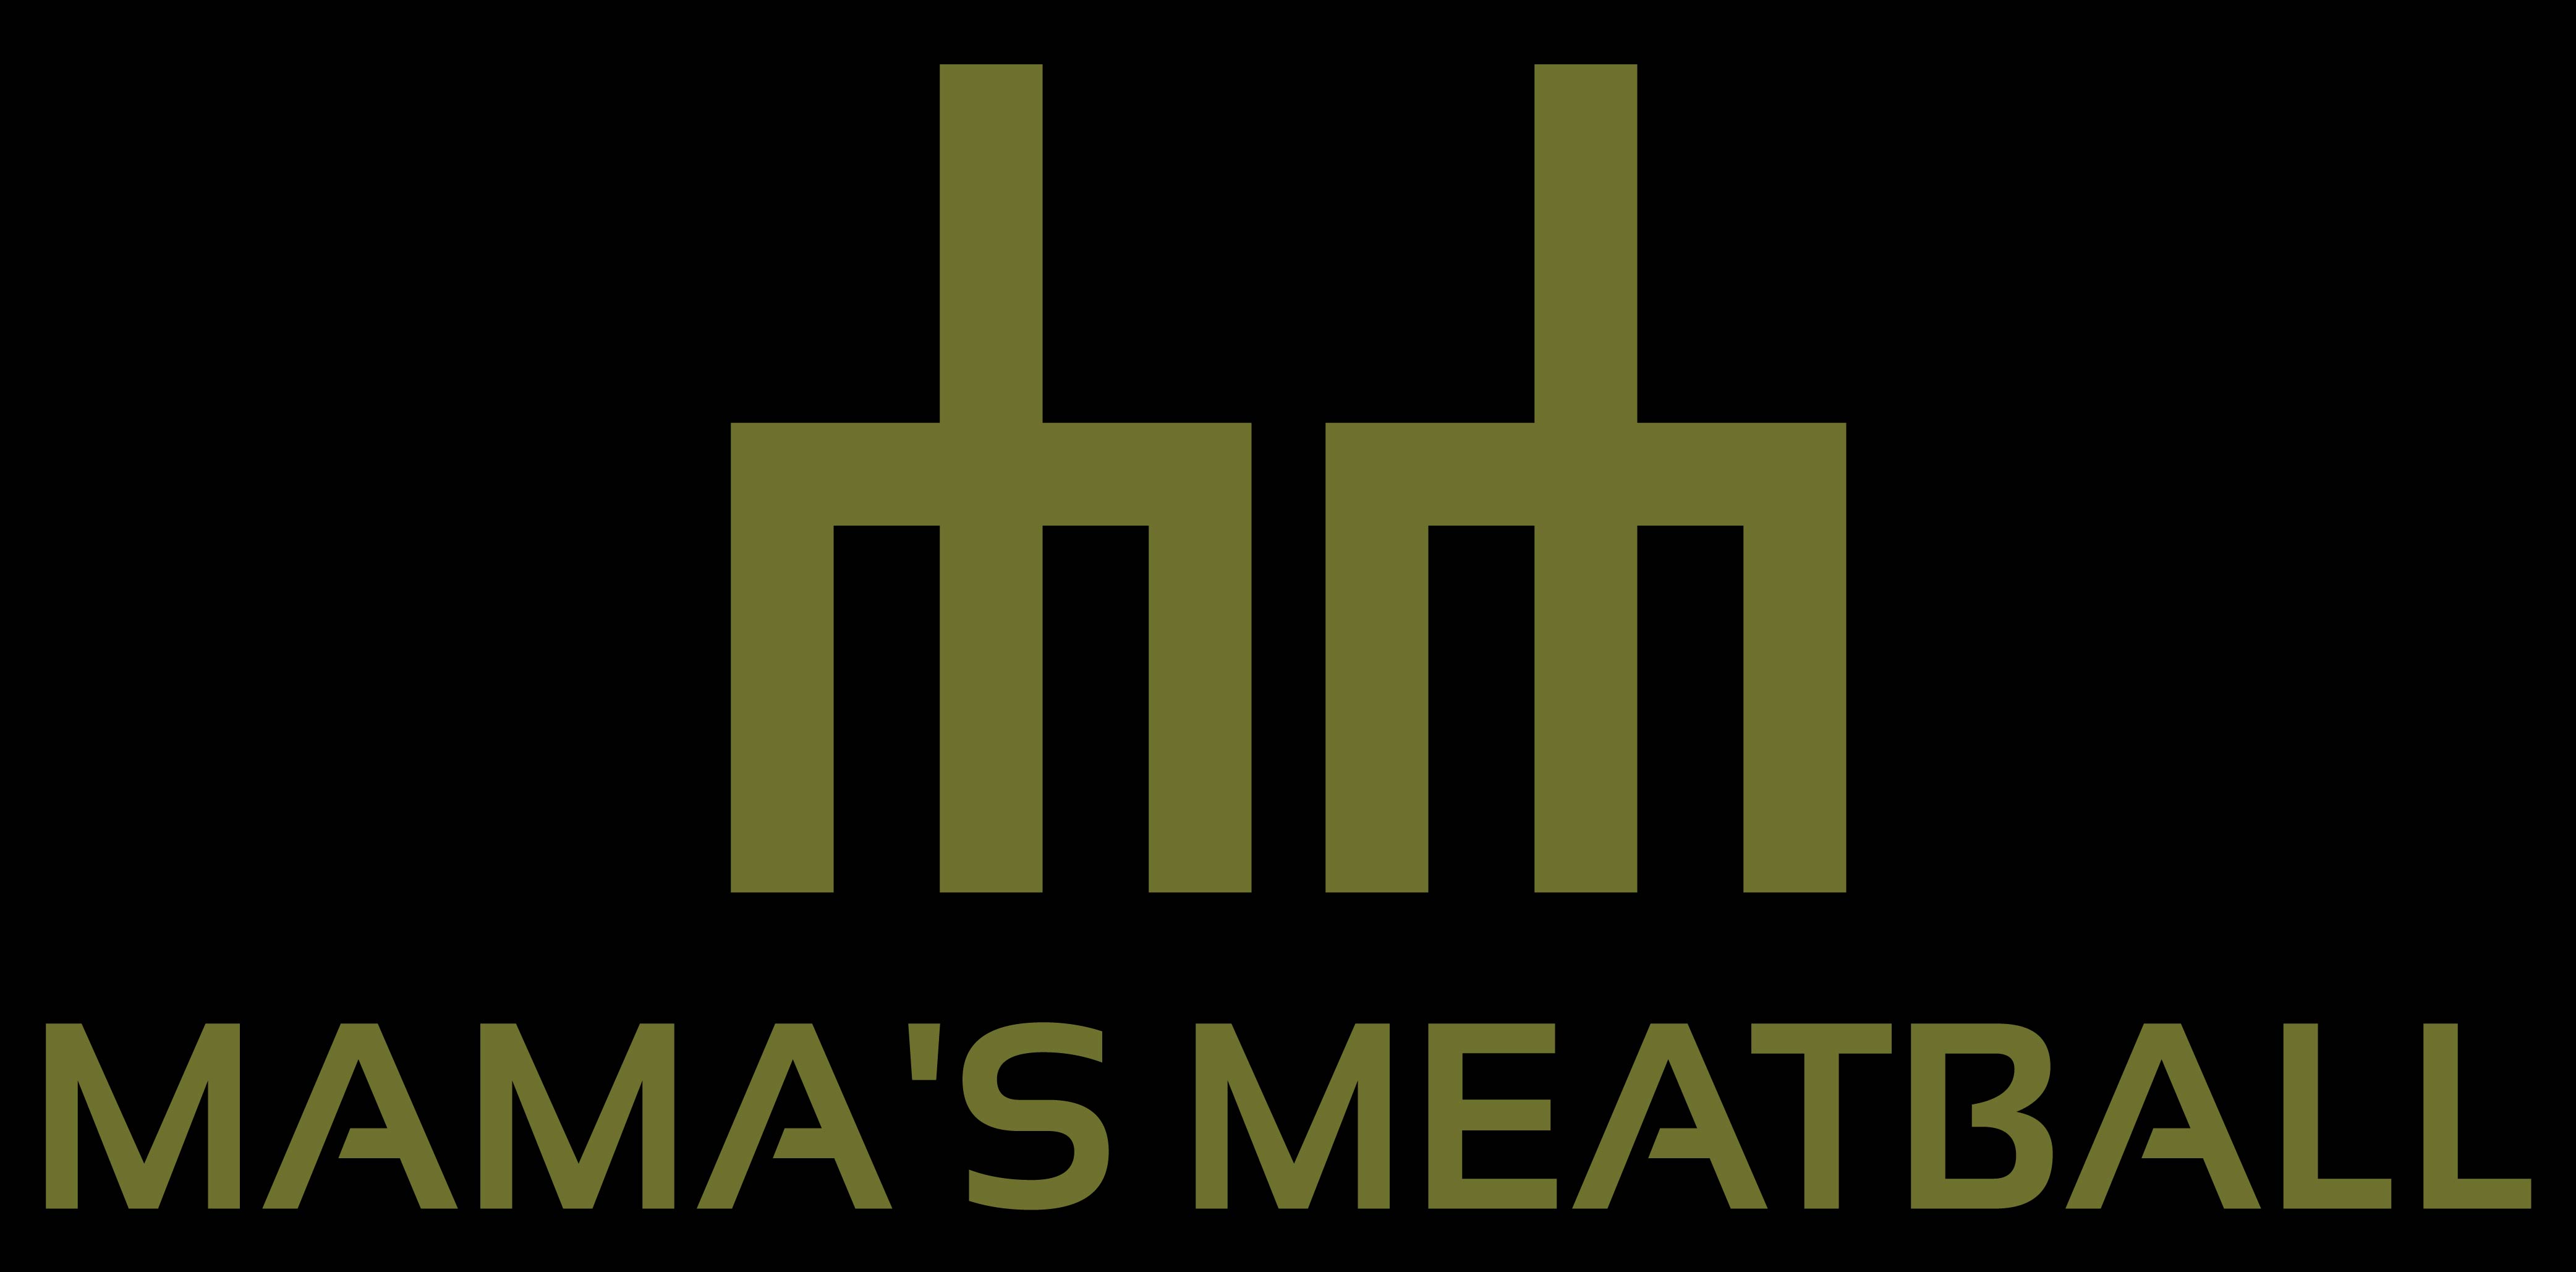 Mama's Meatball logo